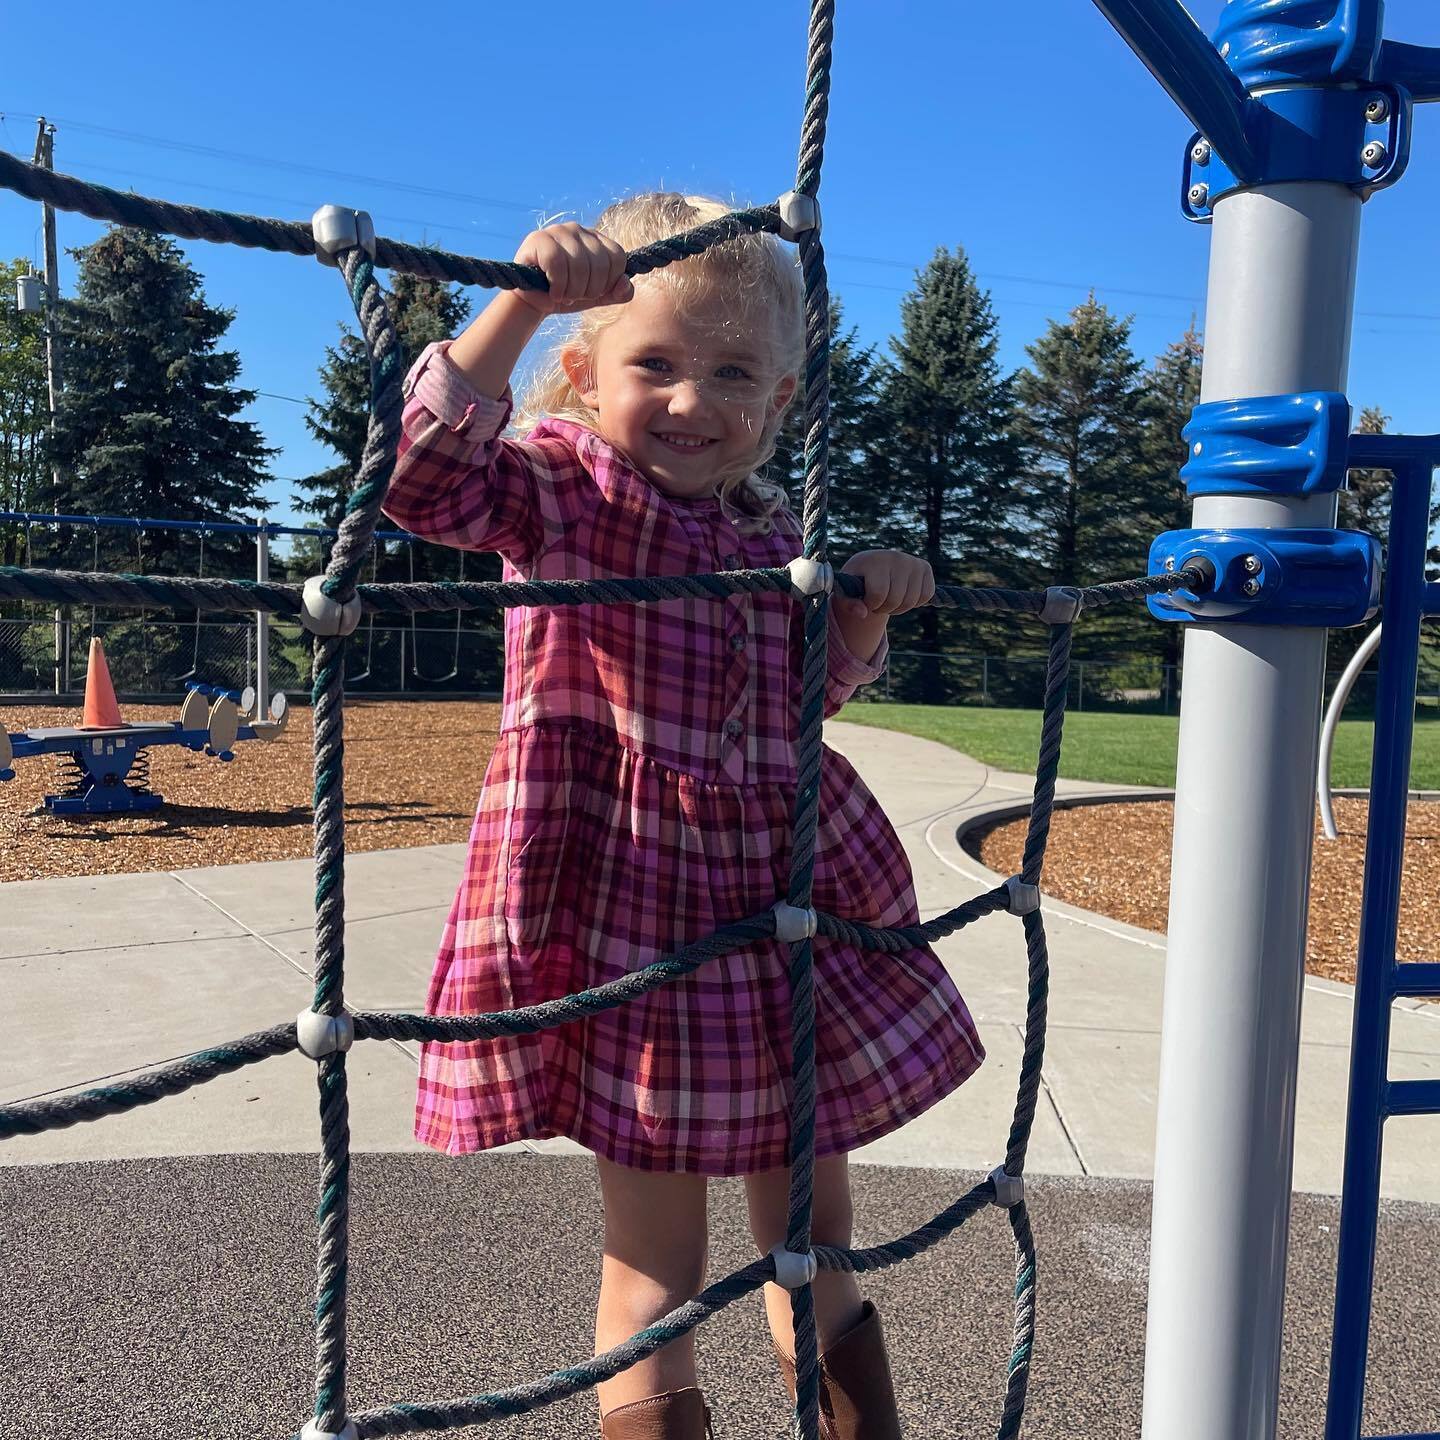 Elementary student on playground